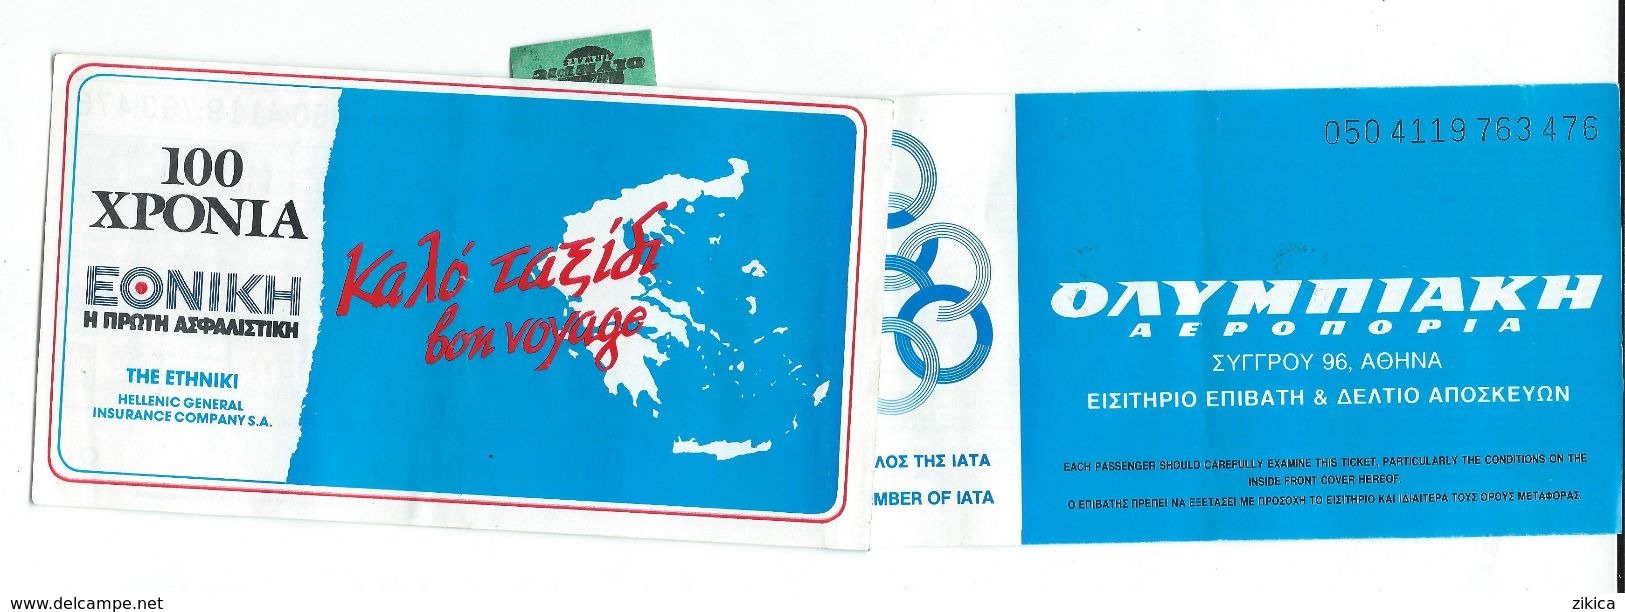 Transportation Tickets - One Way Ticket - Plane - Greece - Avio Company - Olympic Games Logo - Europe